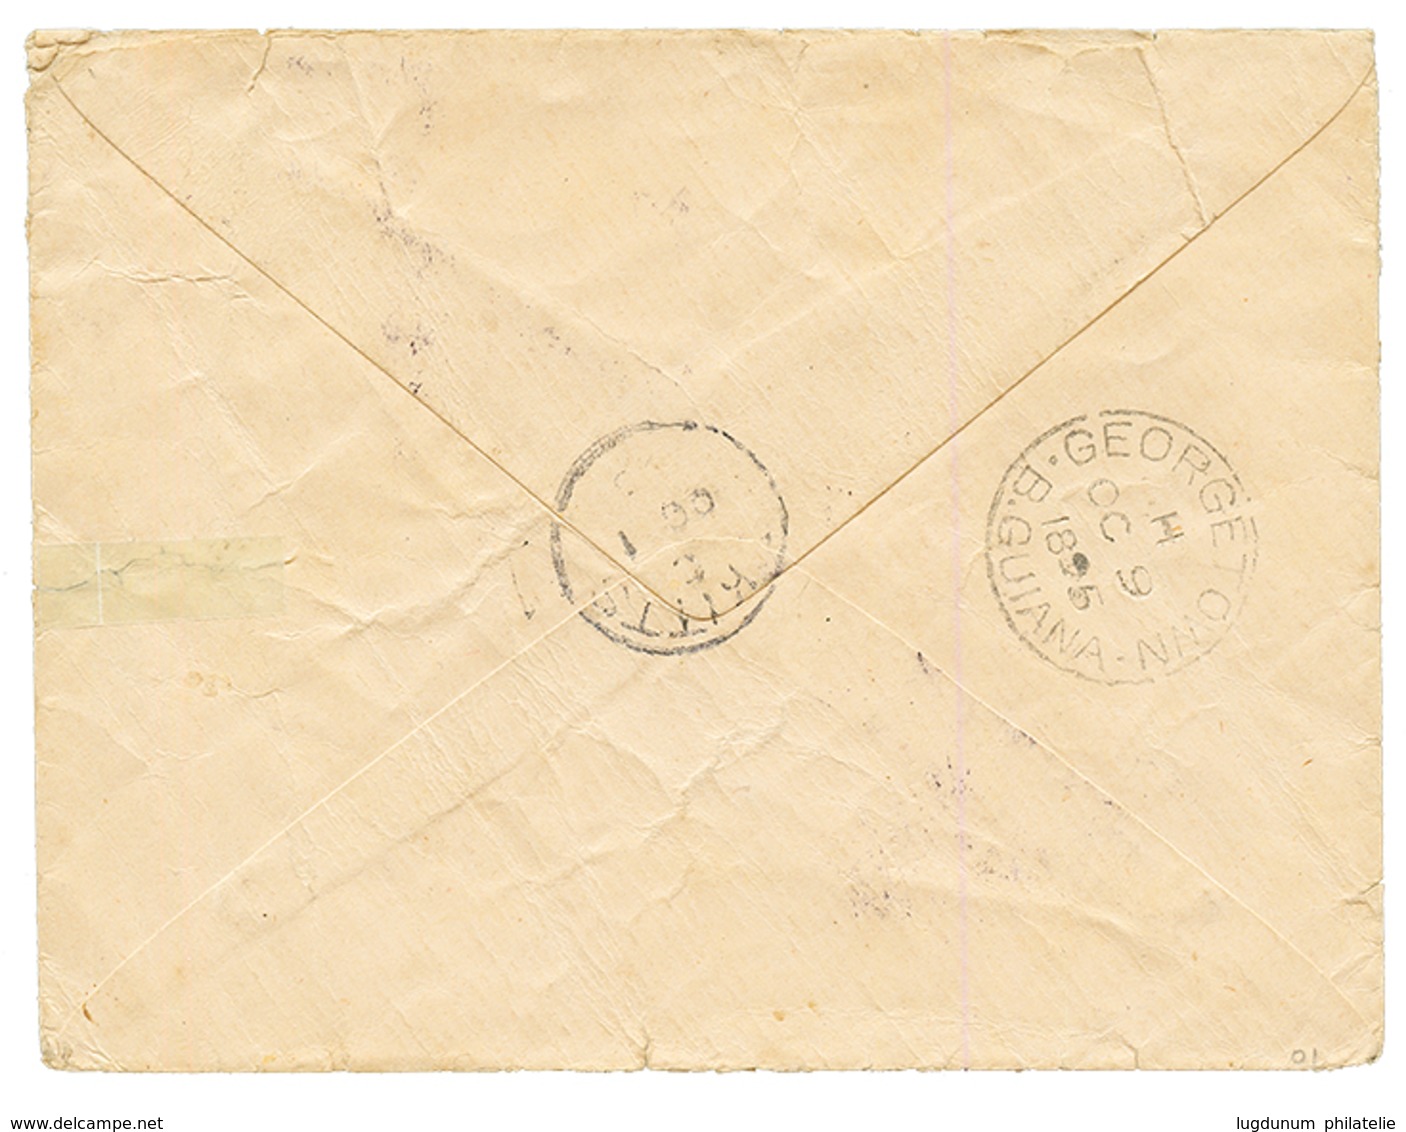 CURACAO : 1895 25c Canc. St EUSTATIUS On Envelope To To DEMERARY (BRITISH GUIANA). Faults But Scarce. Vf. - Curaçao, Nederlandse Antillen, Aruba